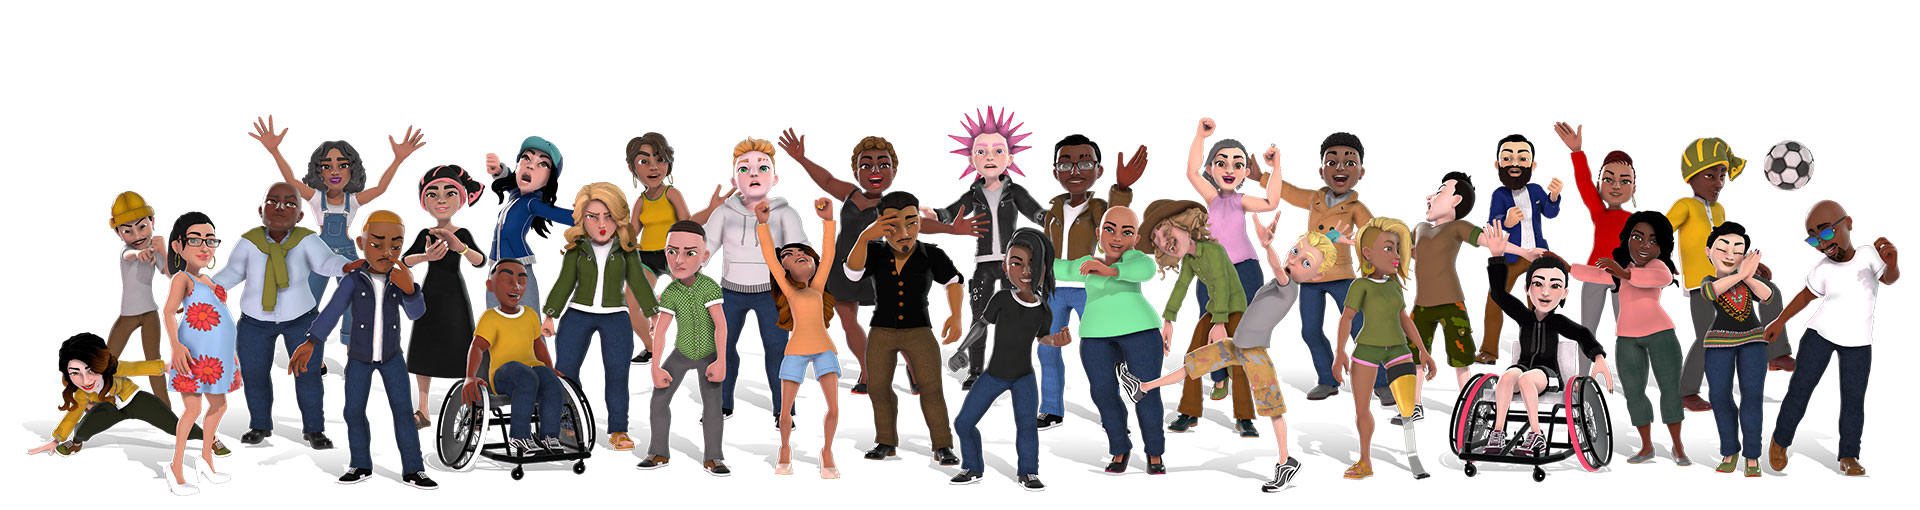 Xbox-avatars die een diverse groep mensen in verschillende outfits laten zien